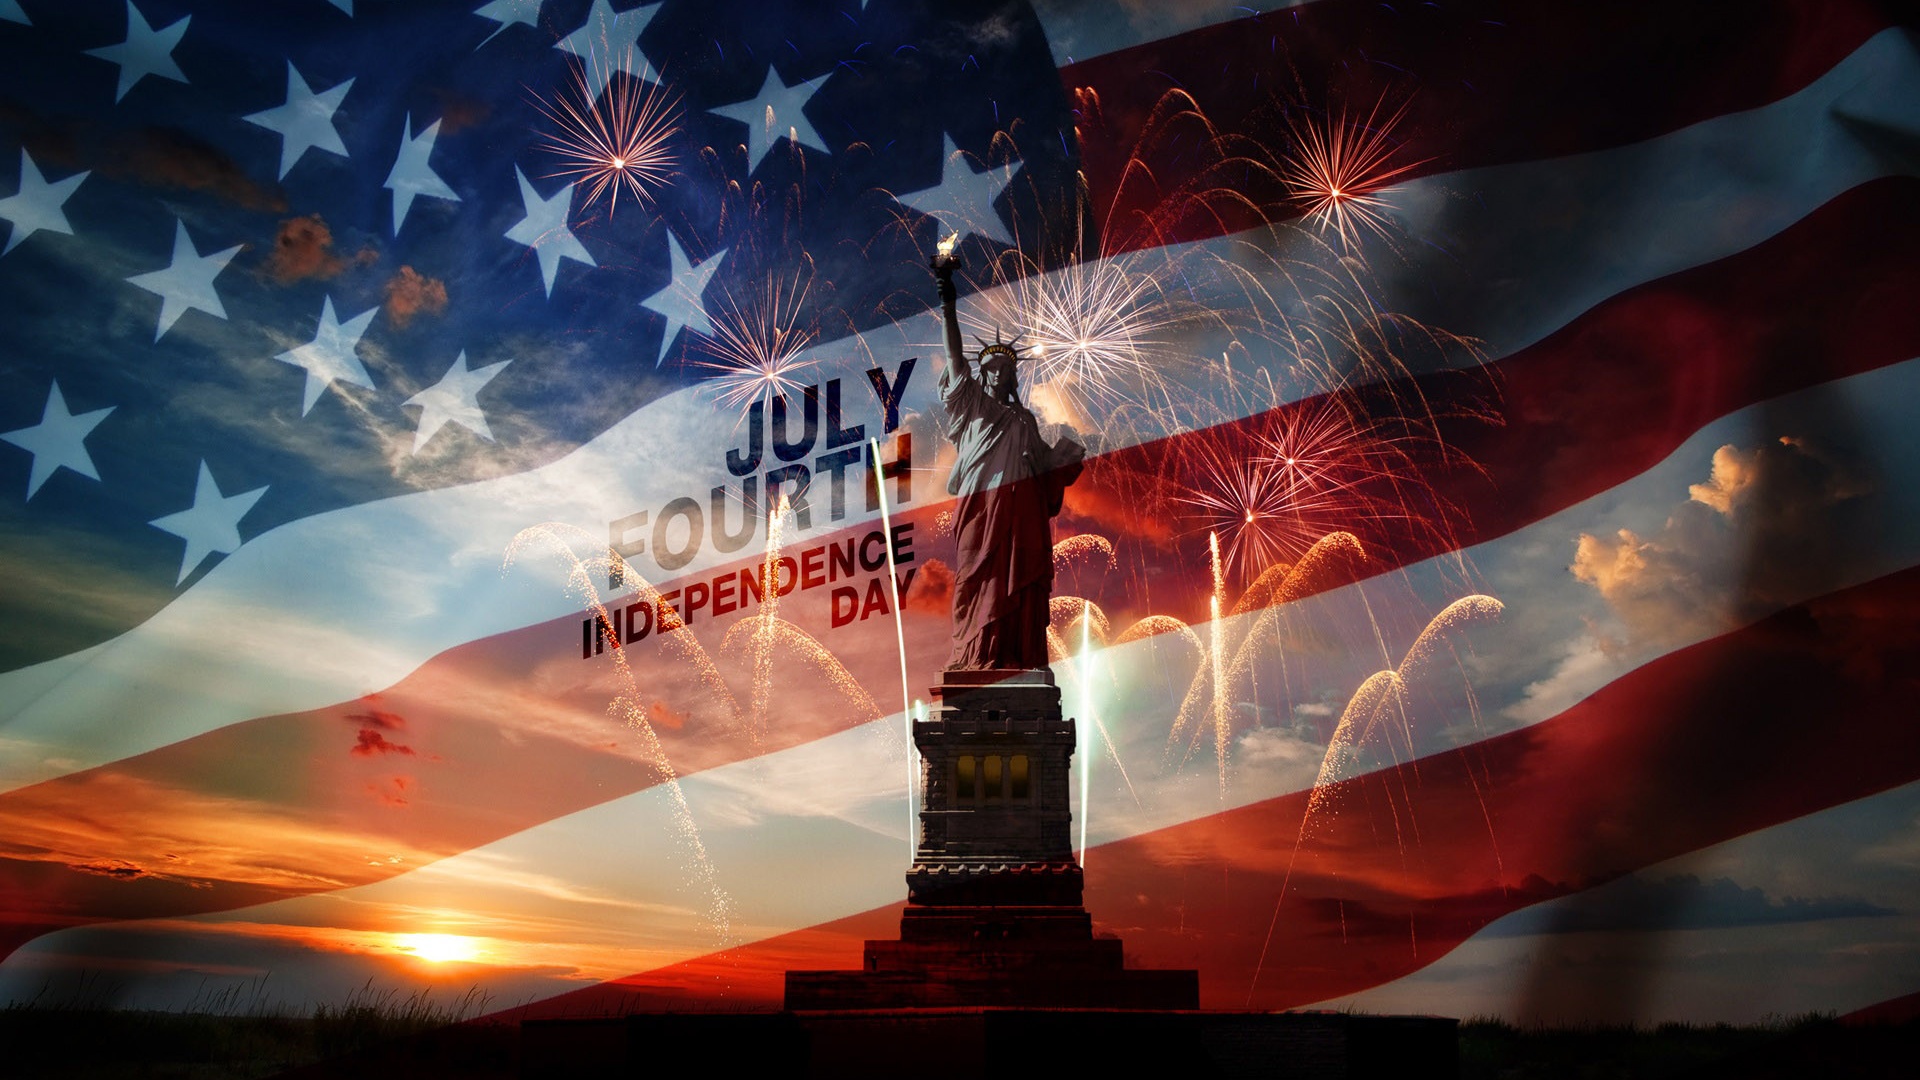 Fourth Of July Statue Of Liberty USA